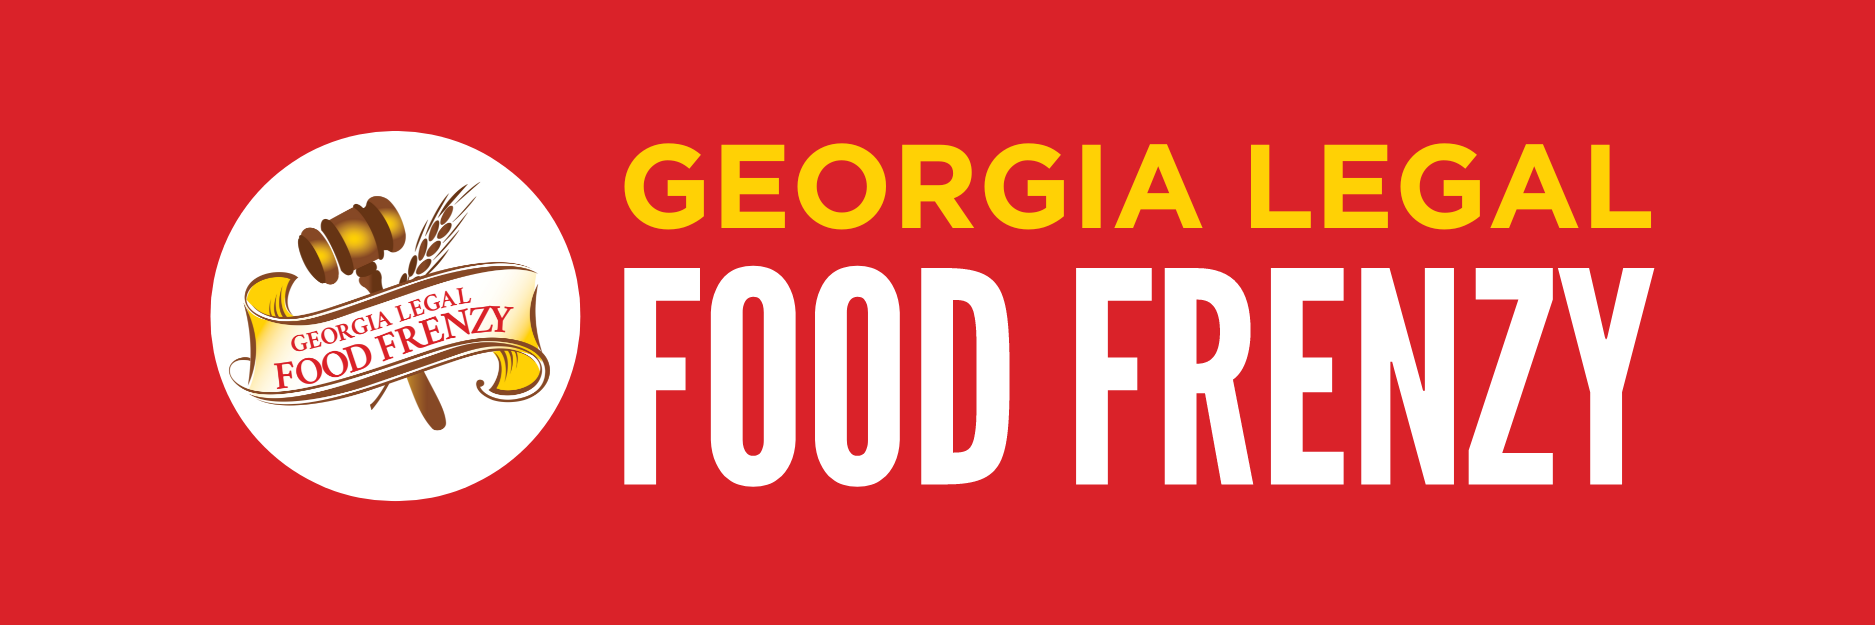 Georgia Legal Food Frenzy